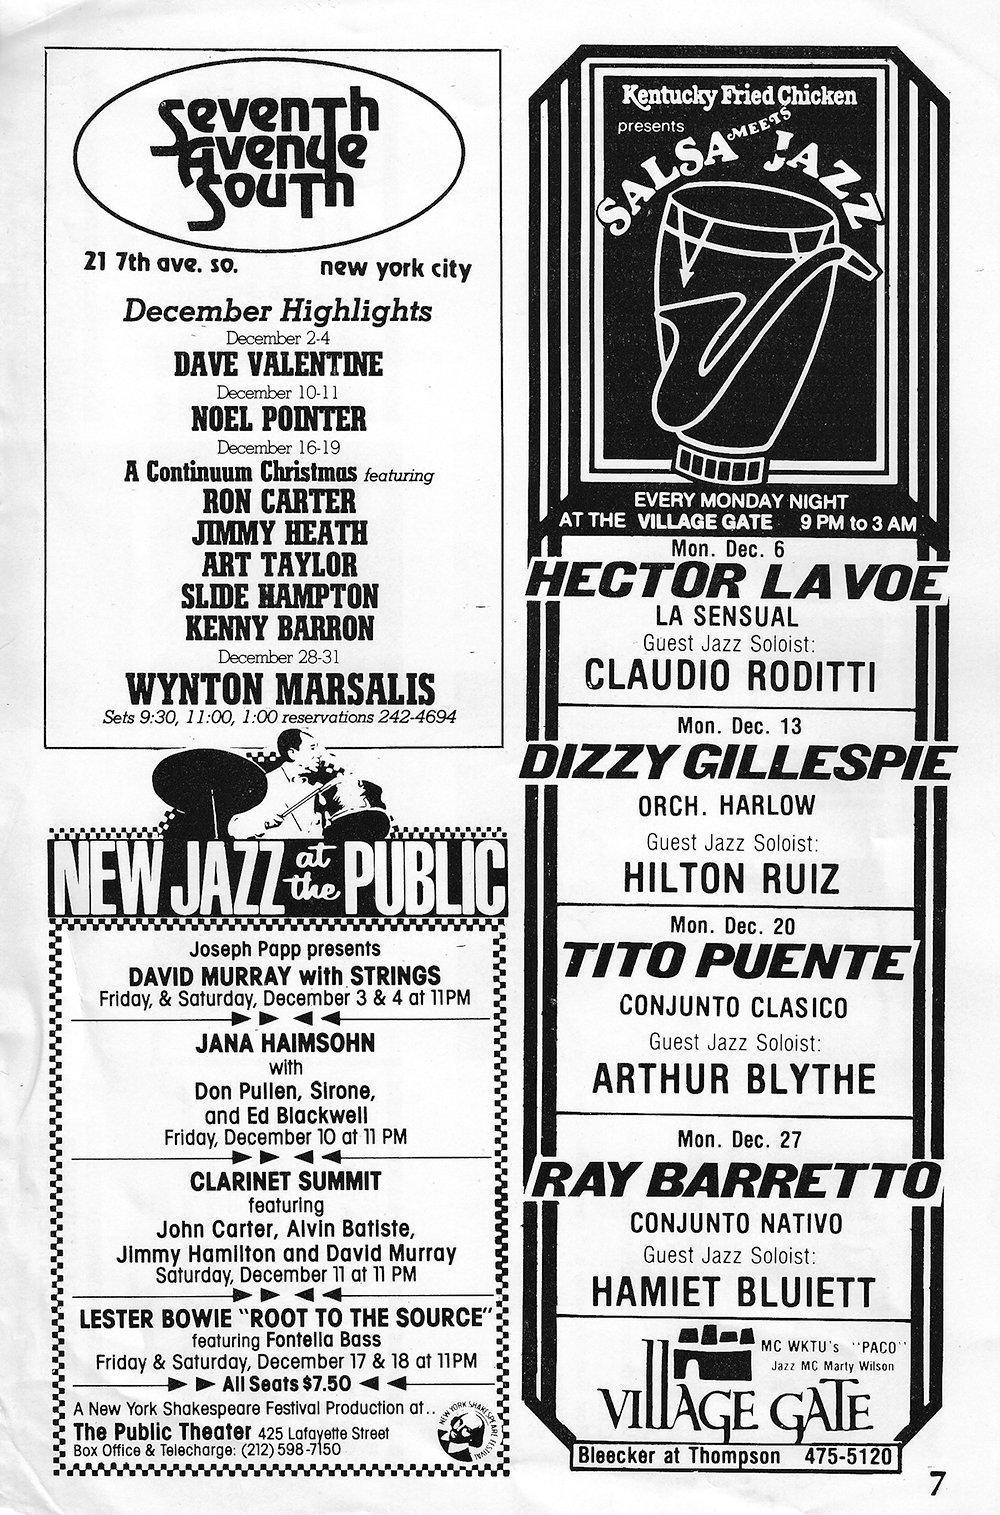 107_New Jazz at The Public_NYC '82.jpg